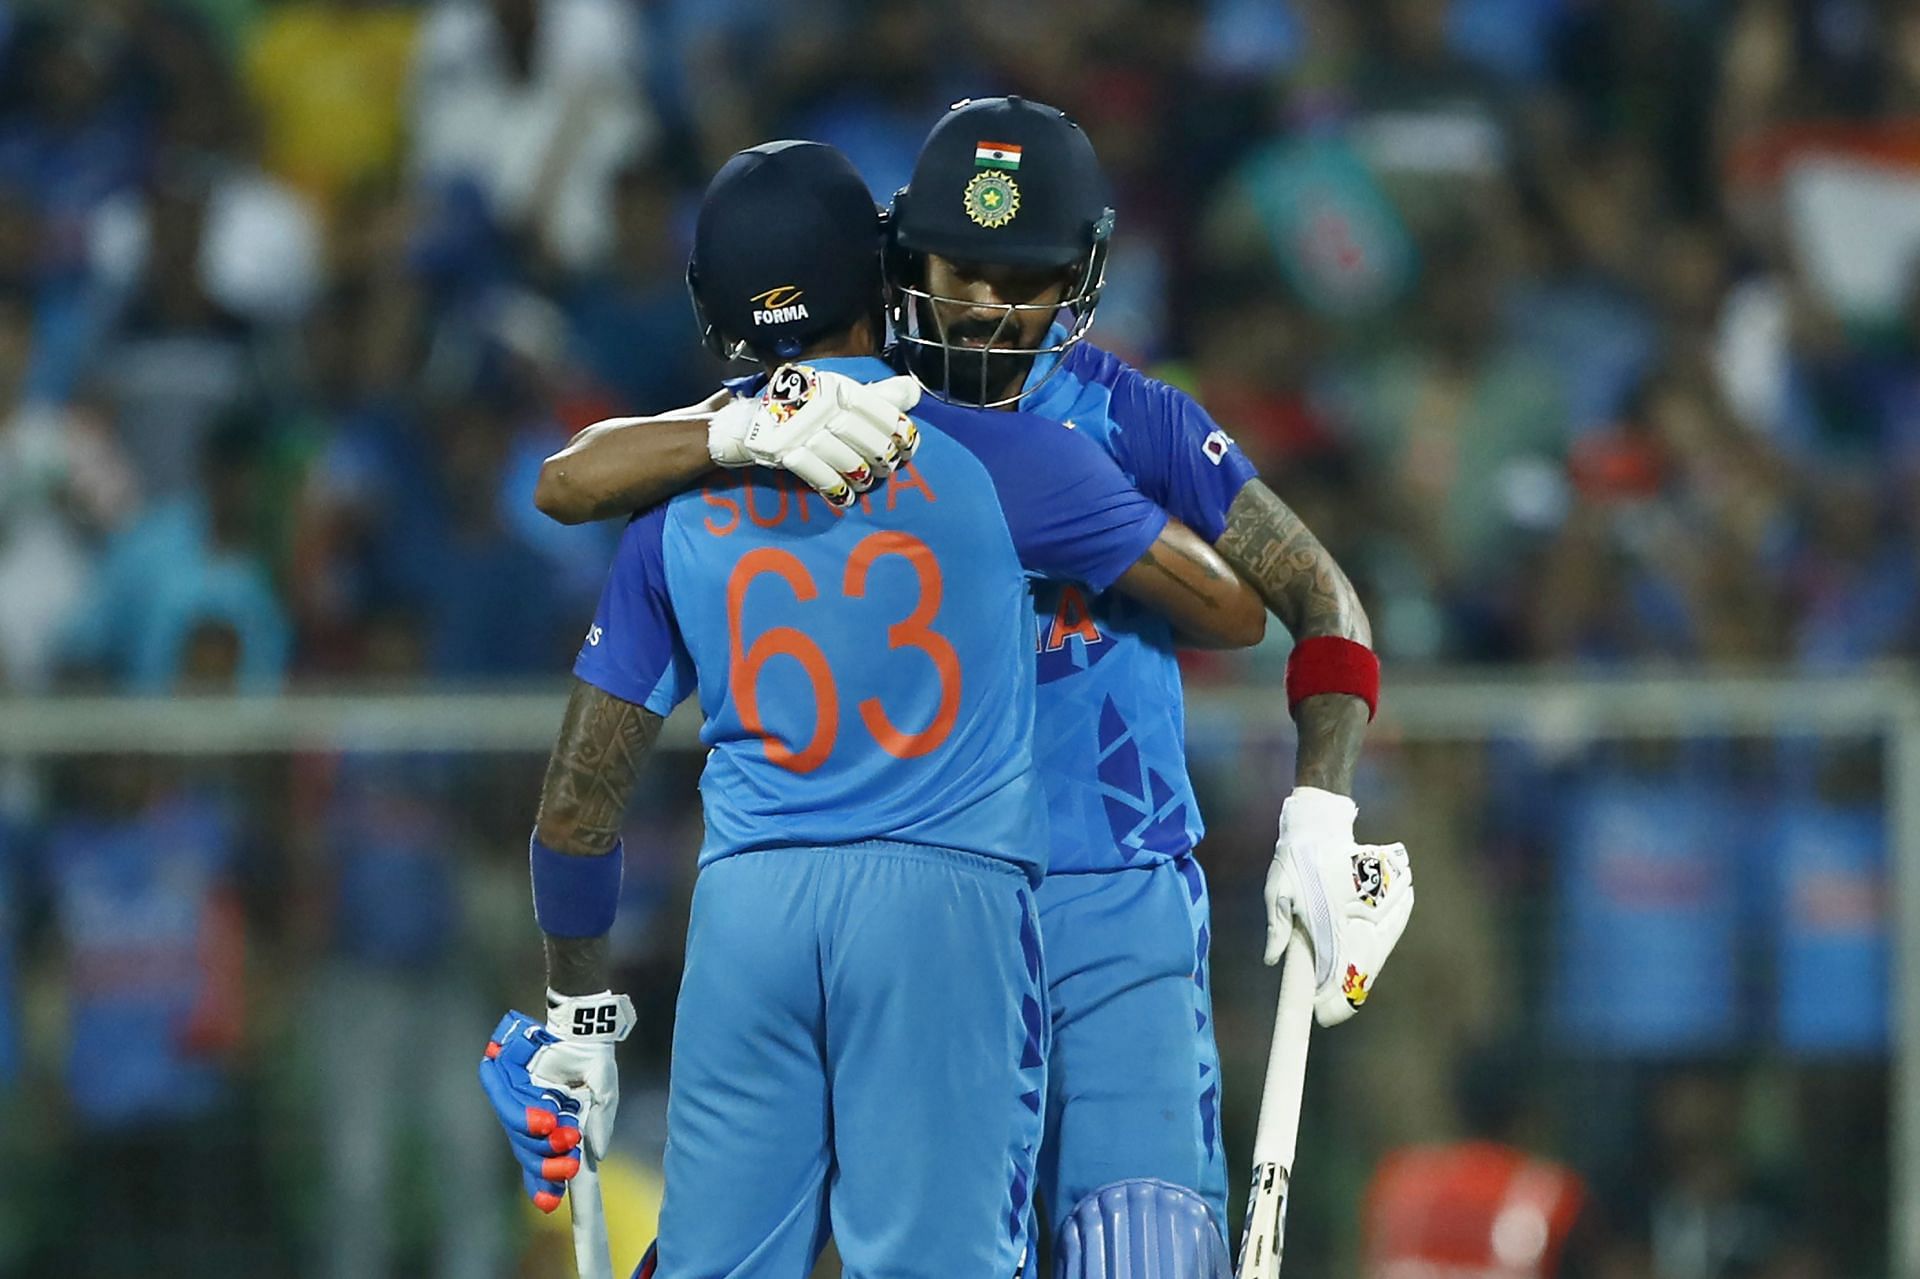 1st T20 International: India v South Africa